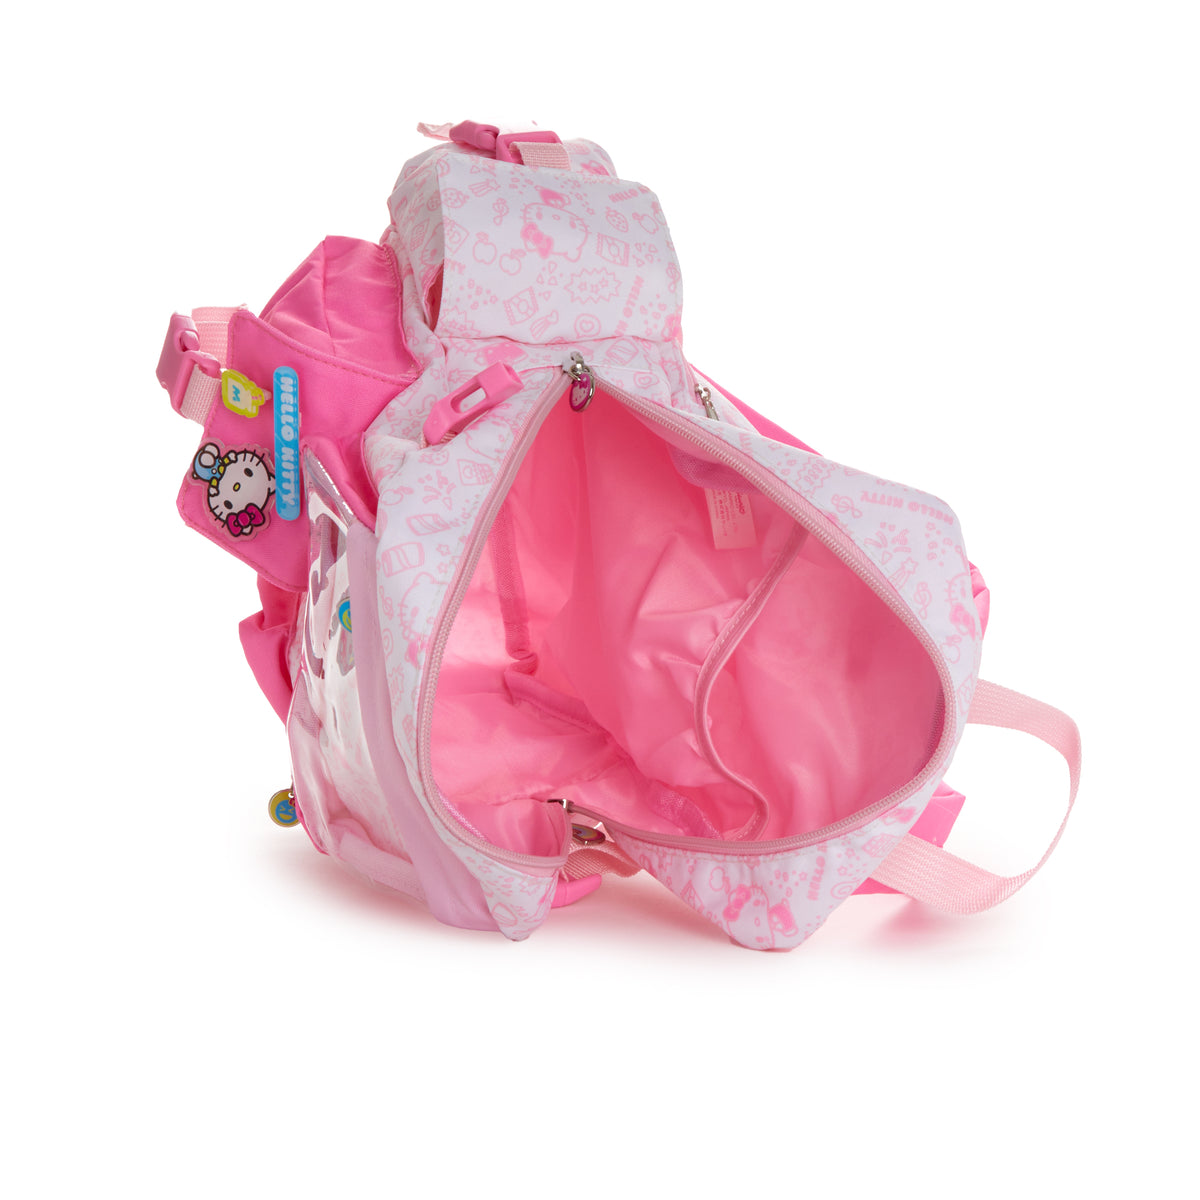 DIY Kawaii Bag Charms - Super Cute Kawaii!!